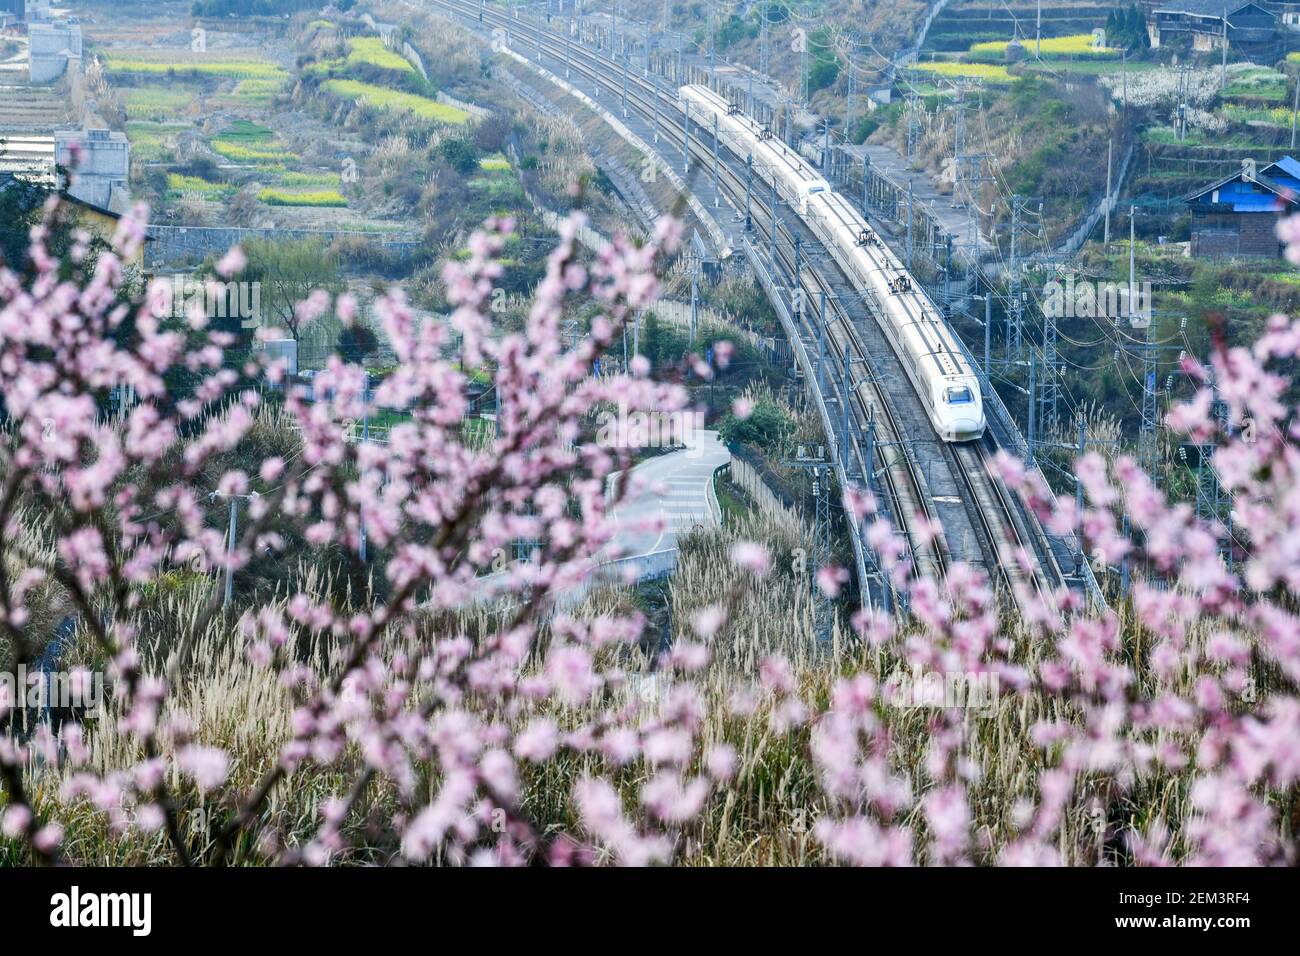 Congjiang, Chinas Provinz Guizhou. Februar 2021, 23rd. Ein Hochgeschwindigkeitszug fährt an den Feldern vorbei, die mit blühenden Pflanzen übersät sind, in der Gemeinde Luoxiang im Bezirk Congjiang, südwestlich von Guizhou, Provinz Chinas, 23. Februar 2021. Quelle: Yang Wenbin/Xinhua/Alamy Live News Stockfoto